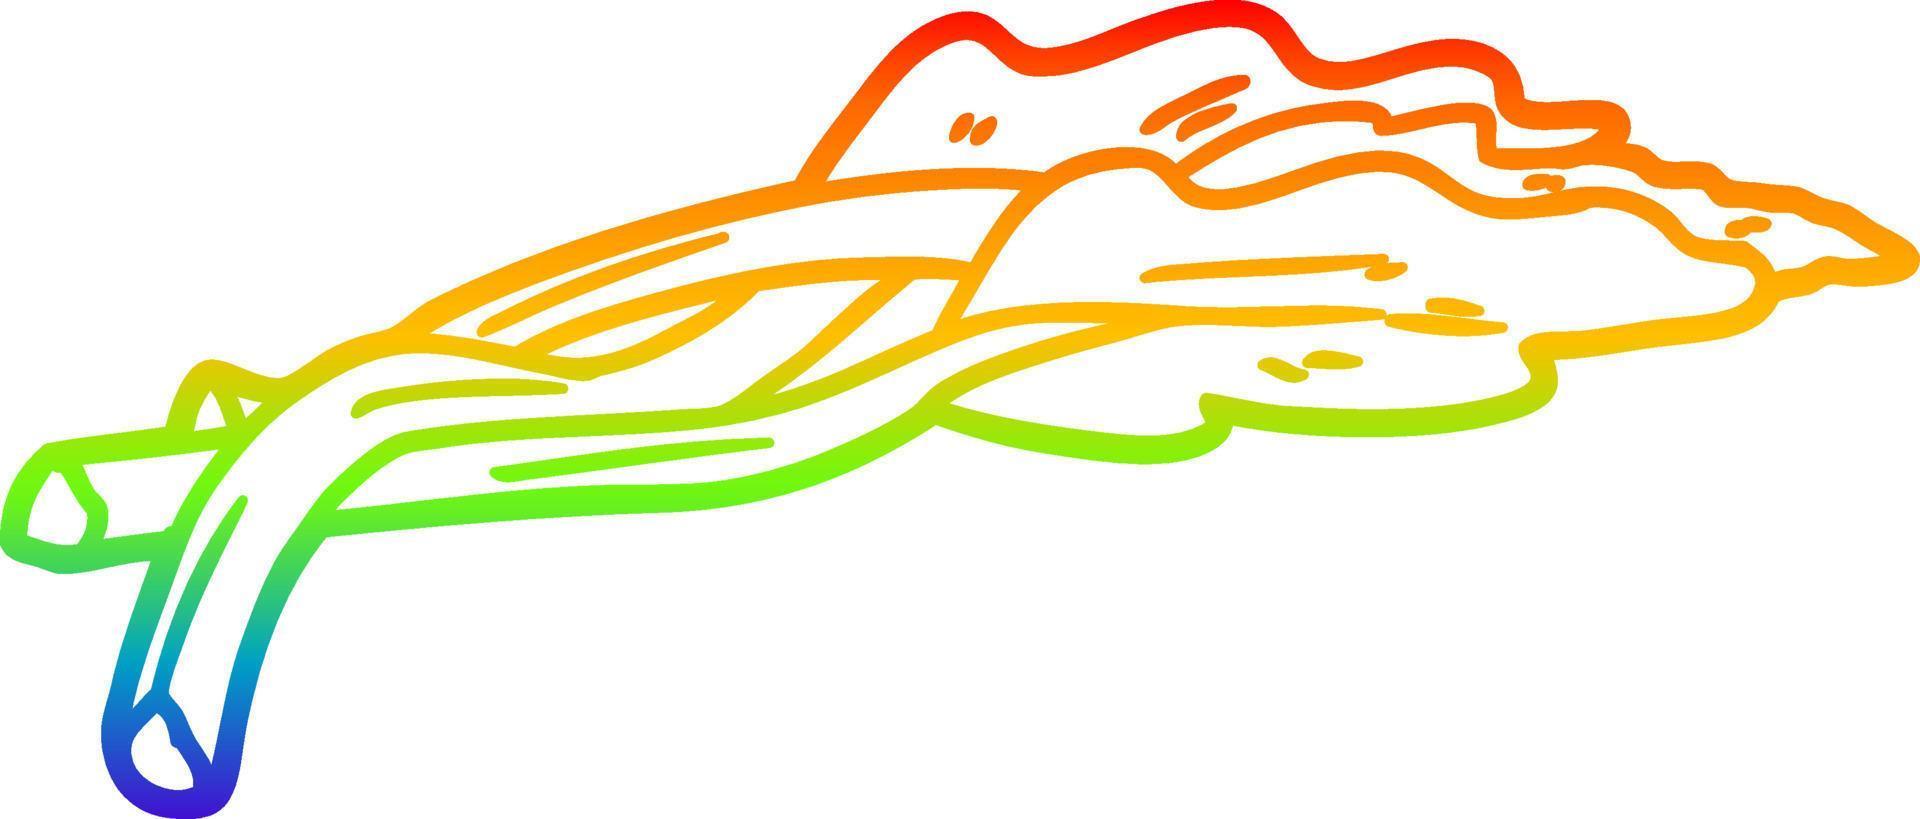 rainbow gradient line drawing cartoon rhubarb vector